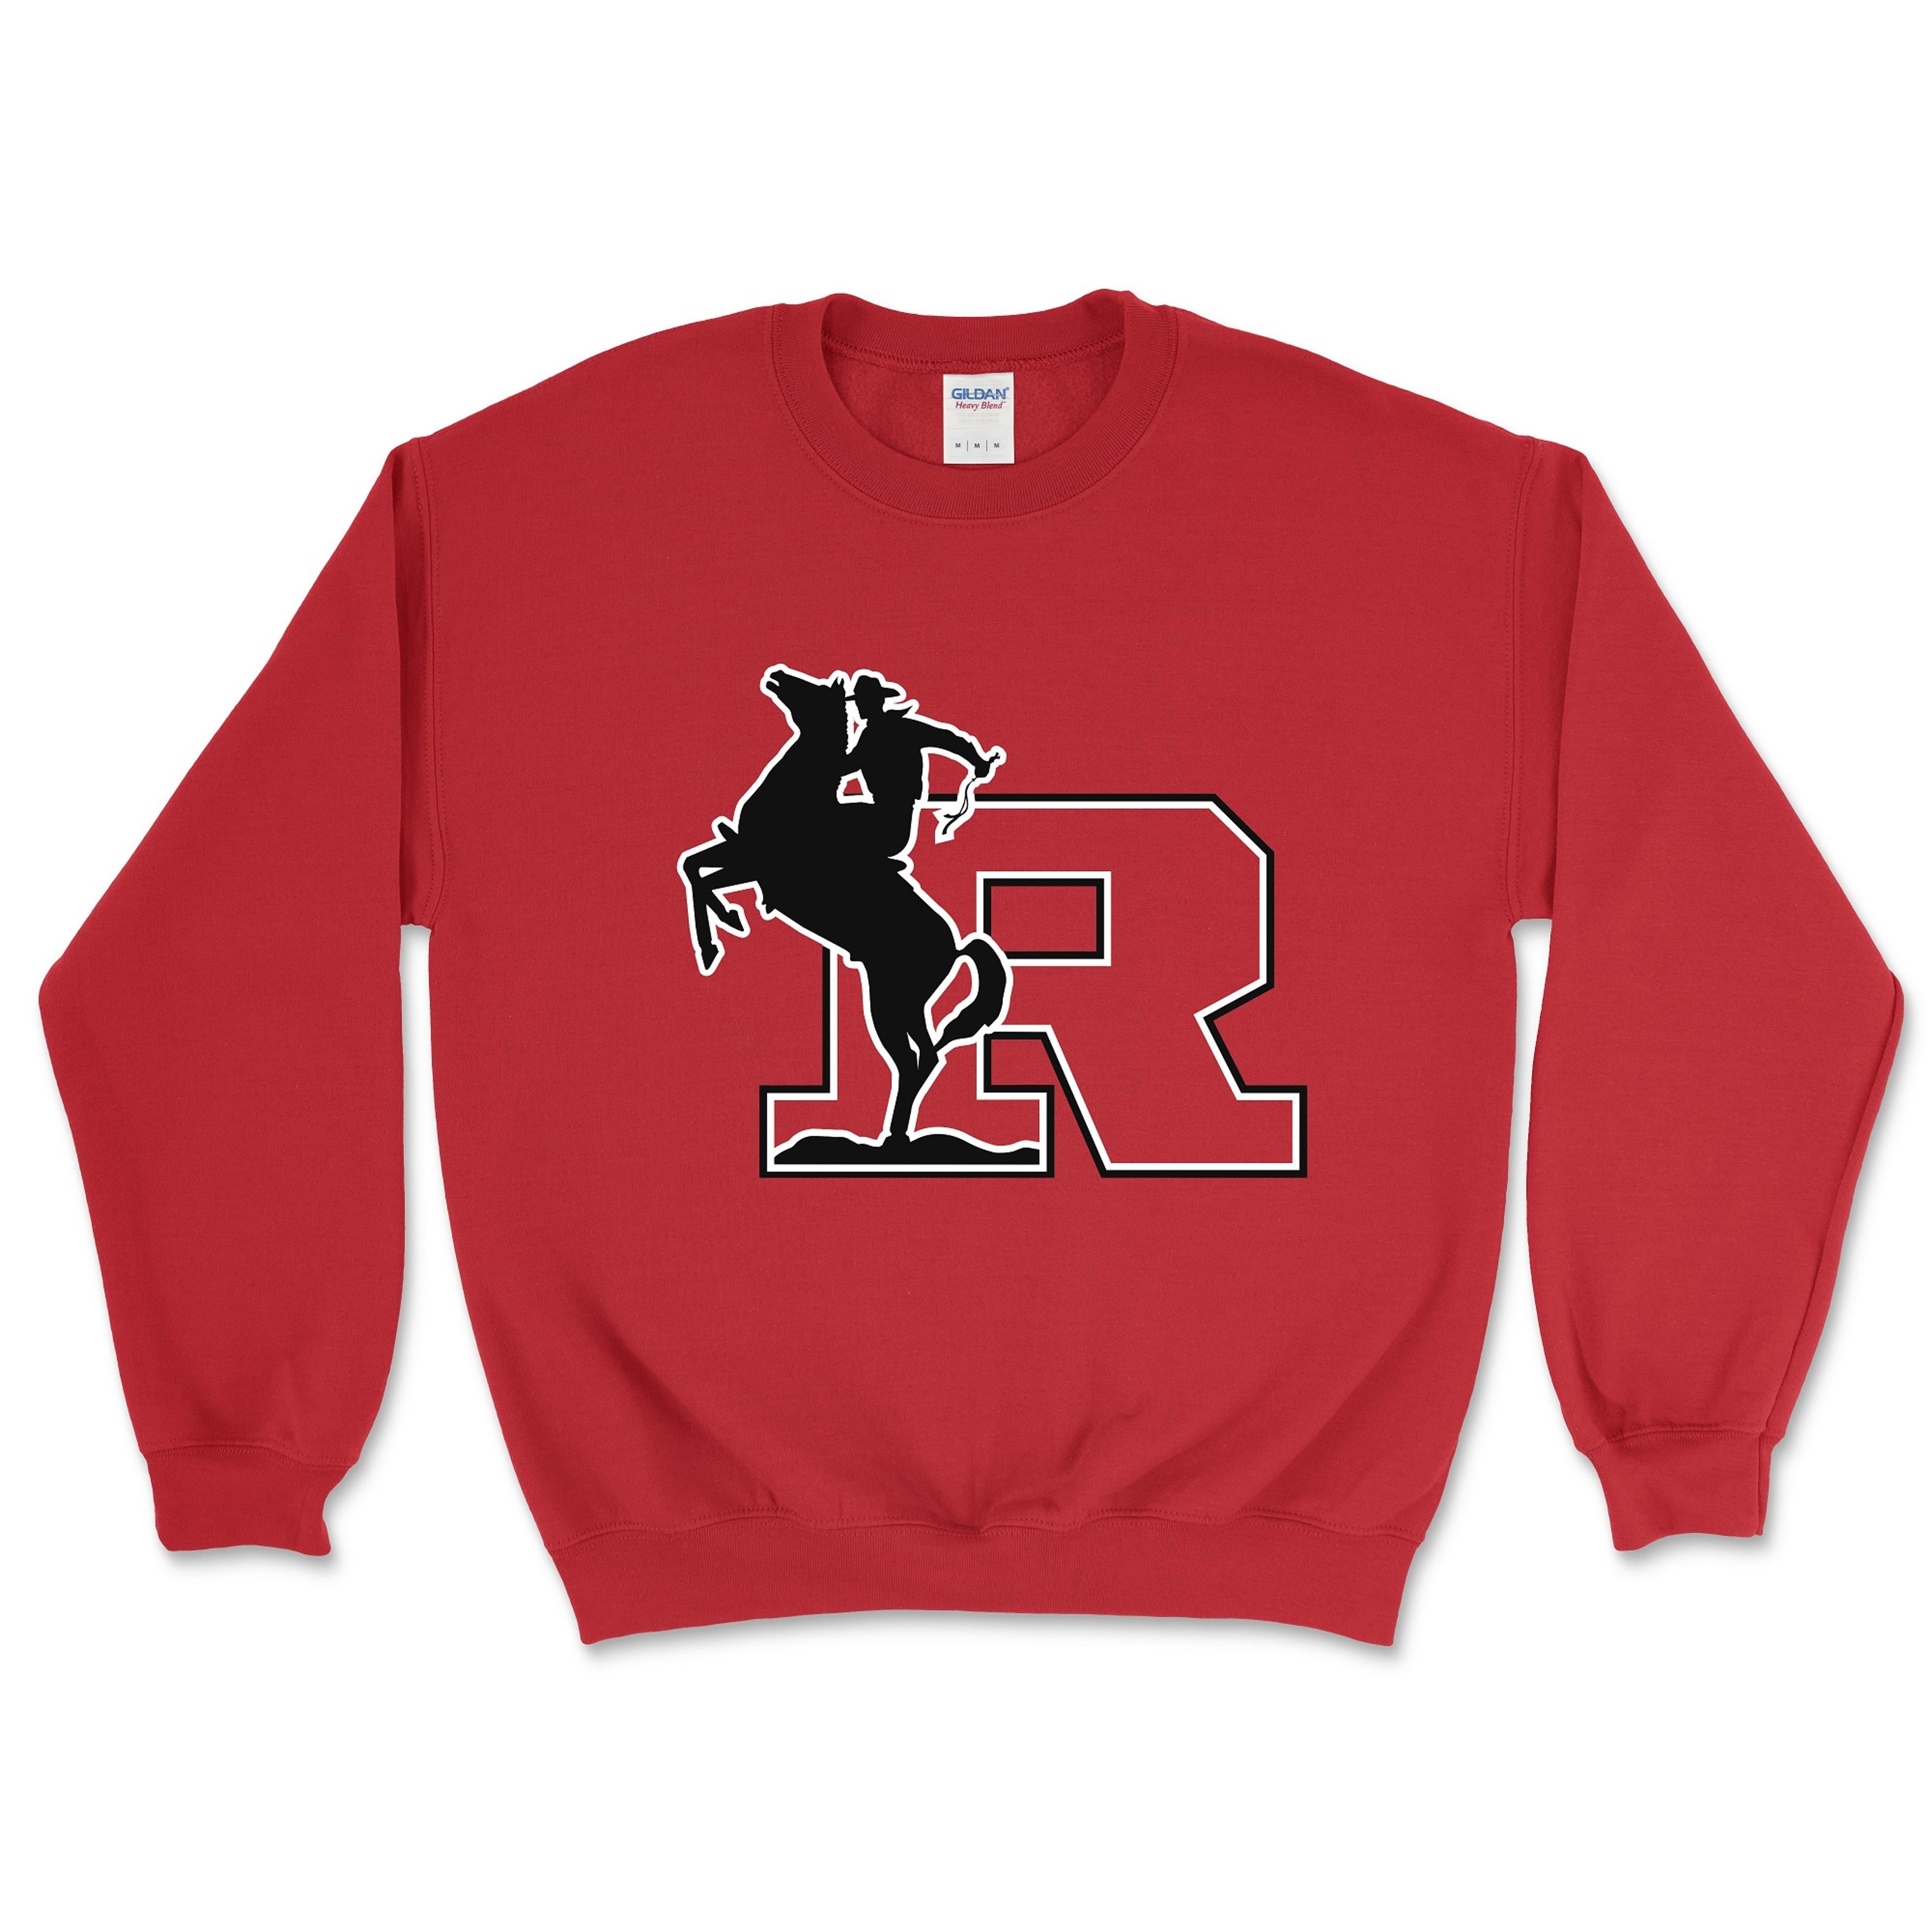 Kent State Red Roosevelt Crewneck Sweatshirt